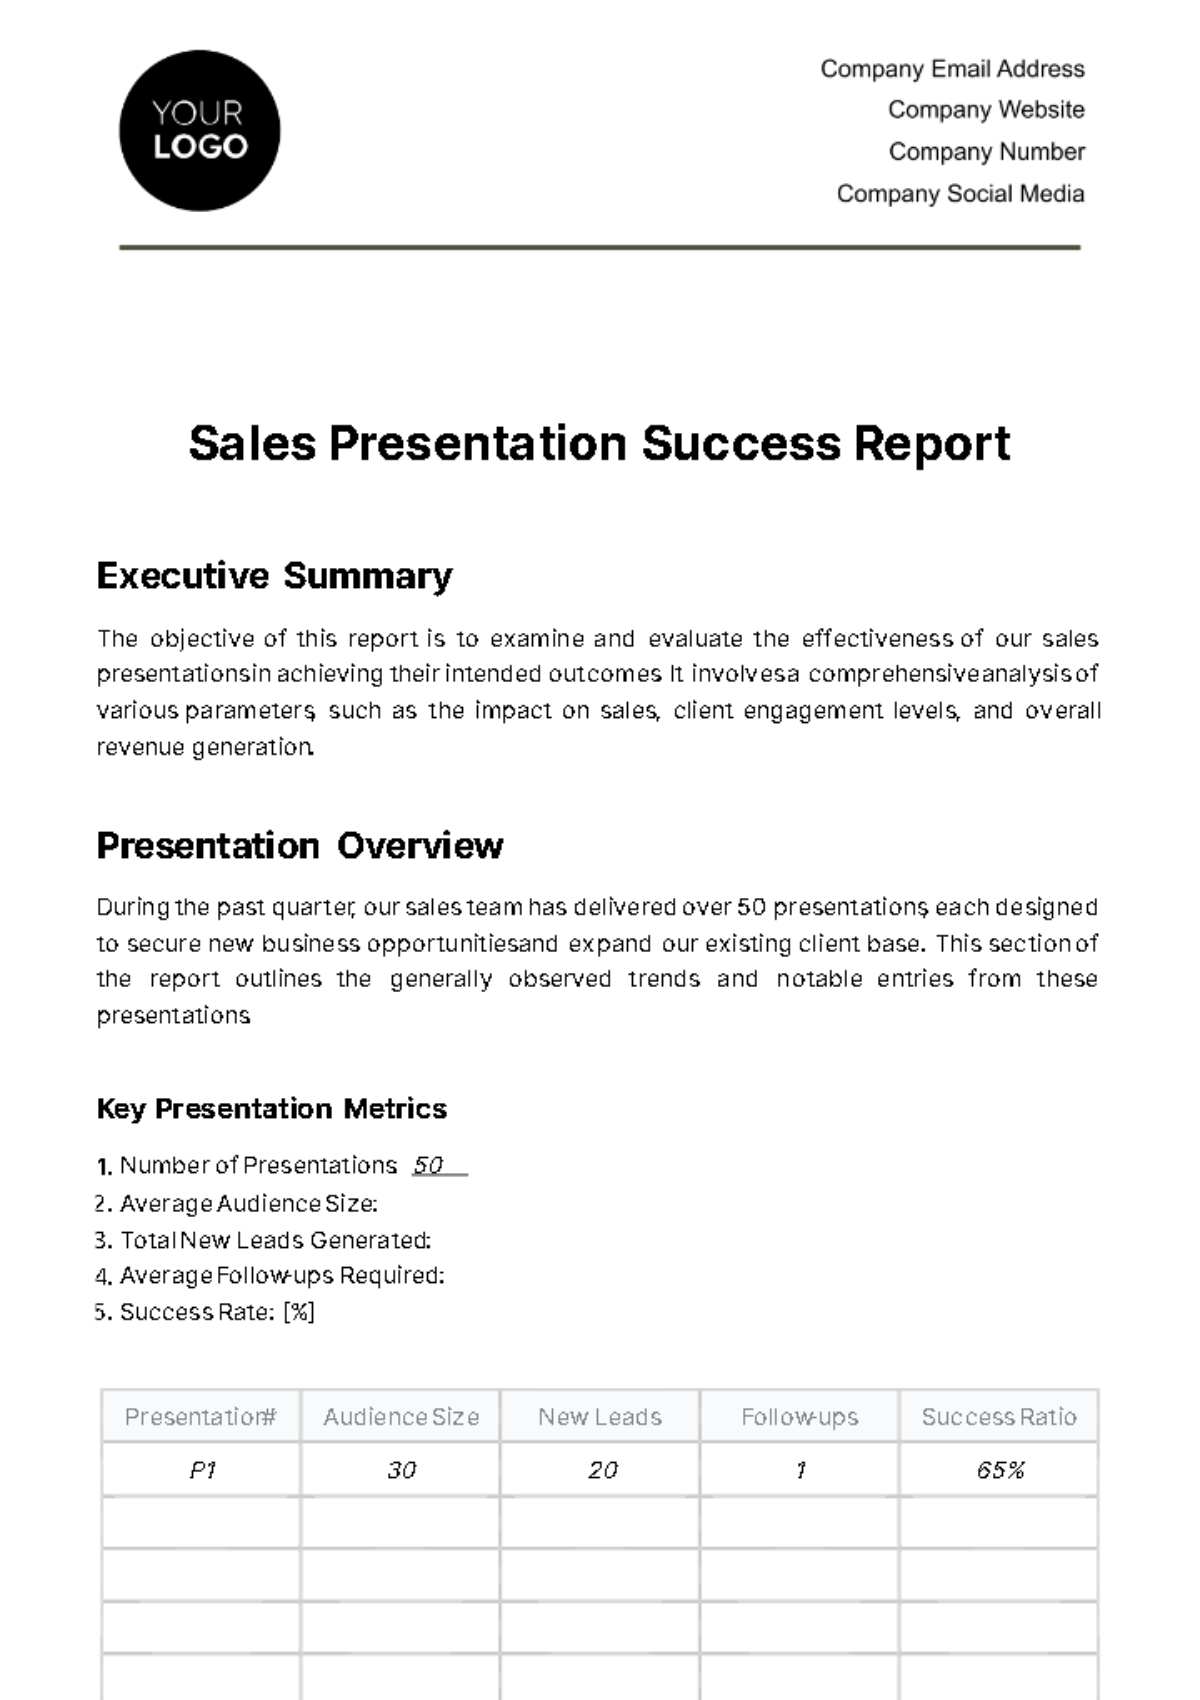 Sales Presentation Success Report Template